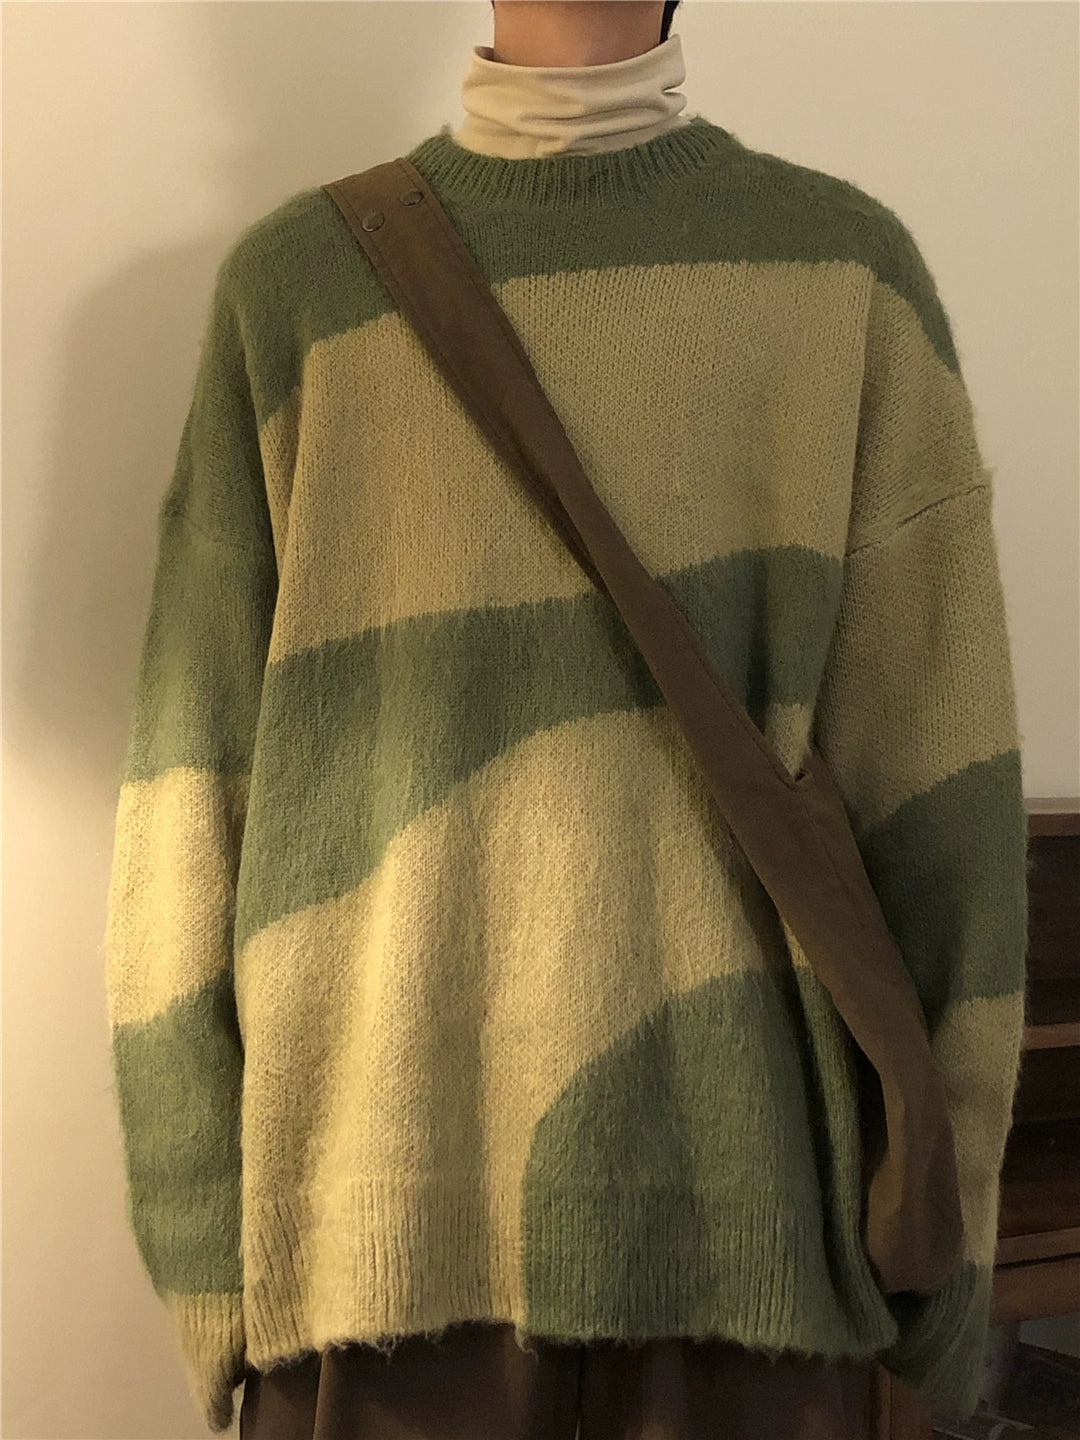 Nagawl Wide Stripes Sweater